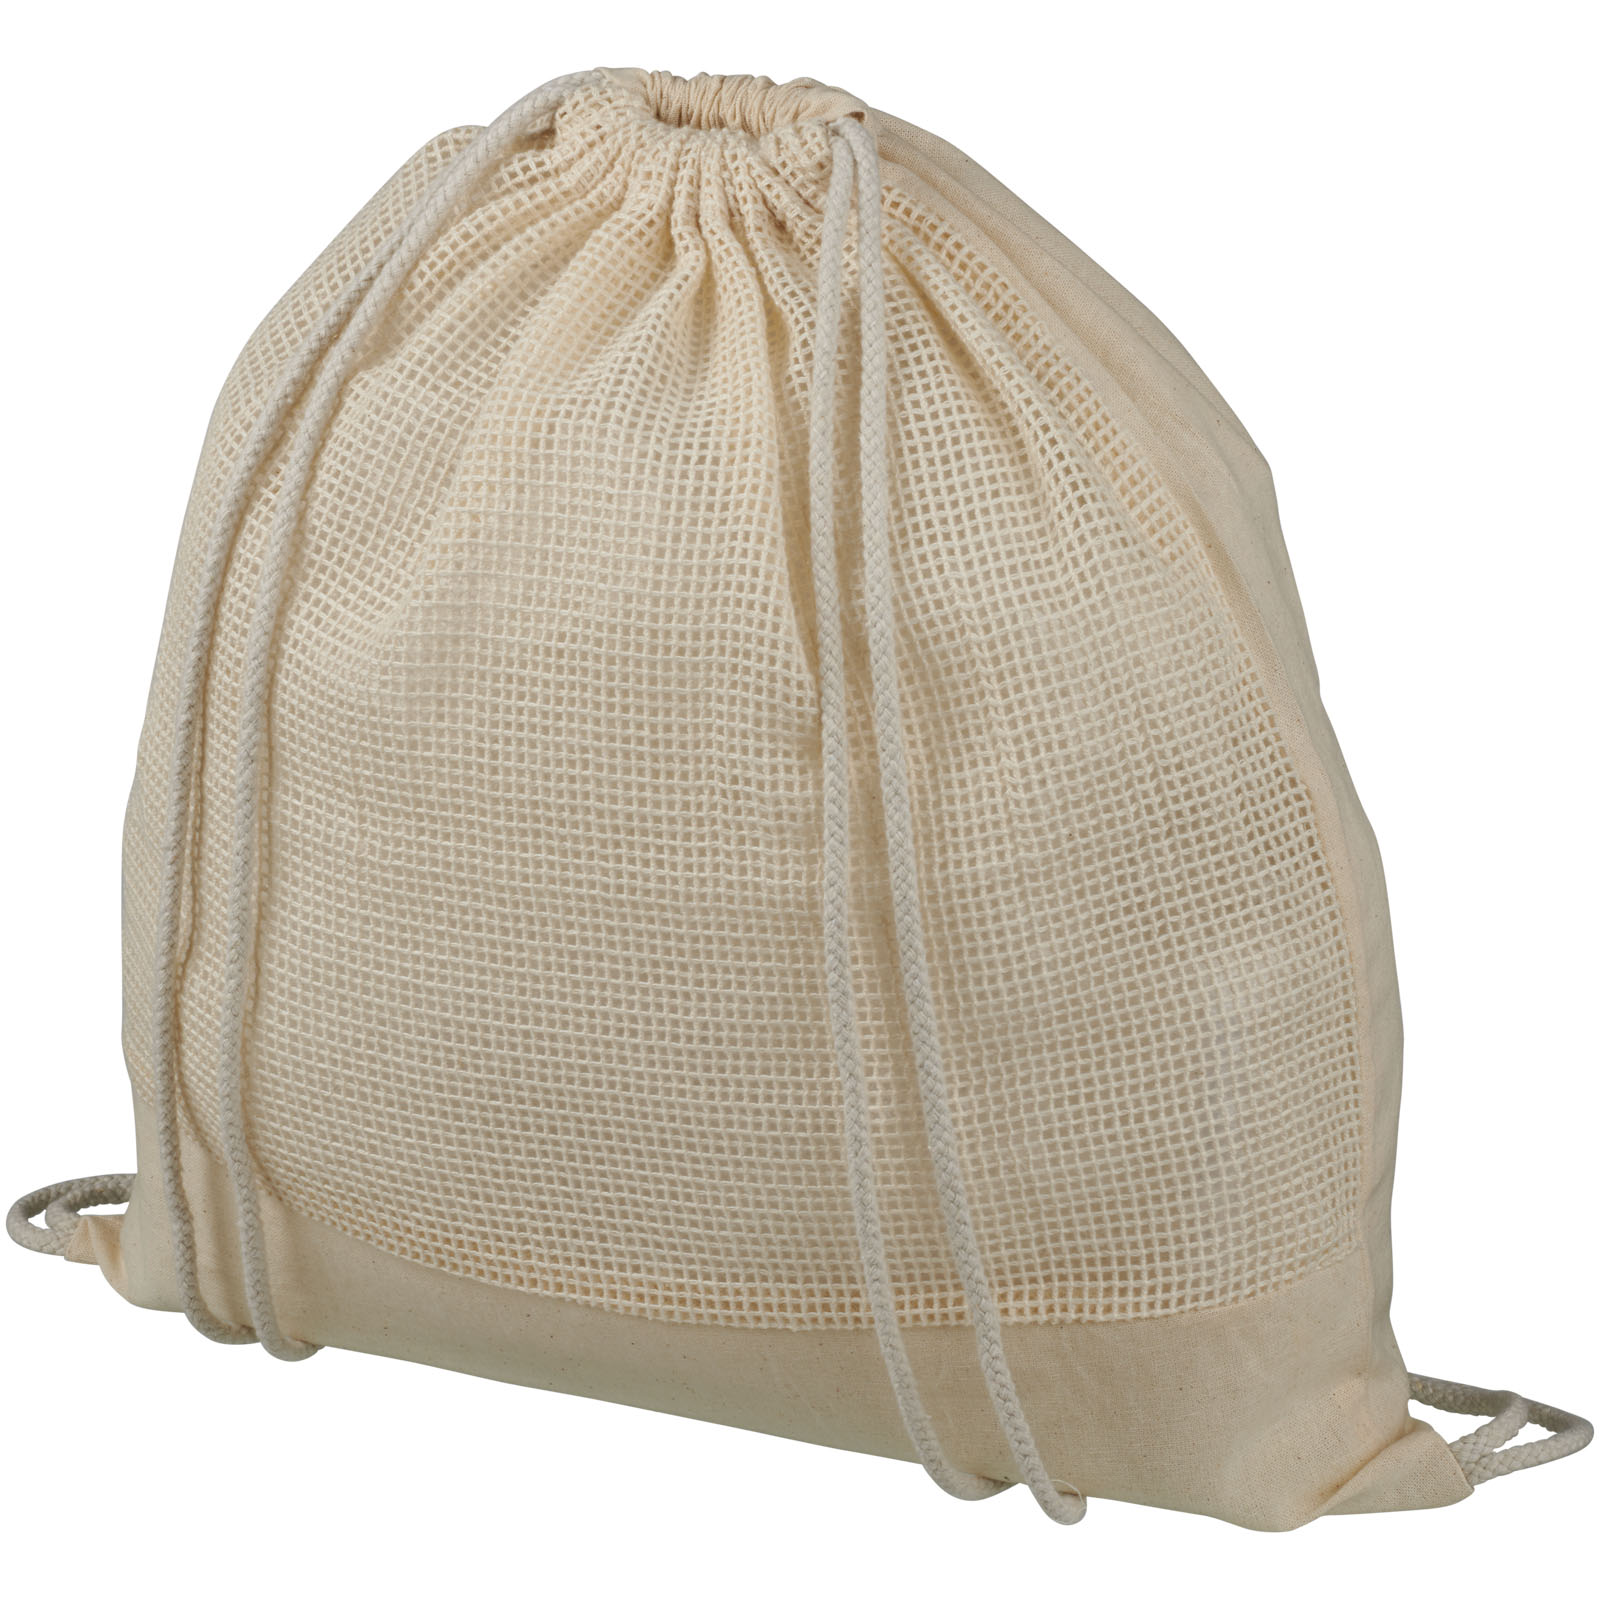 Bags - Maine mesh cotton drawstring bag 5L